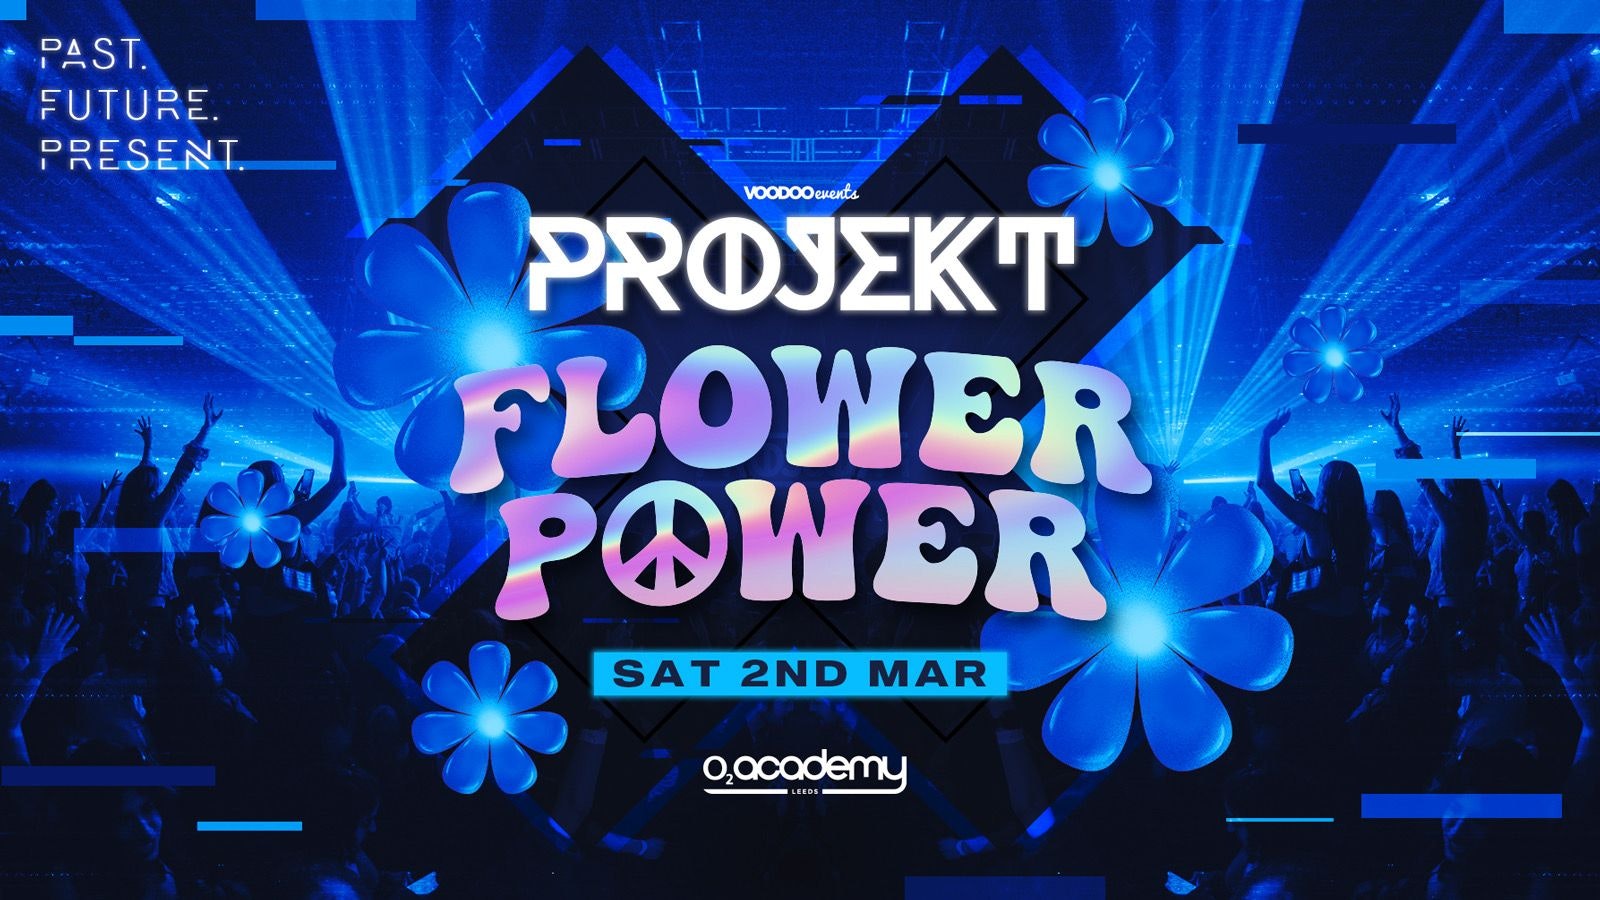 PROJEKT – Saturdays at O2 Academy – Flower Power – 2nd March